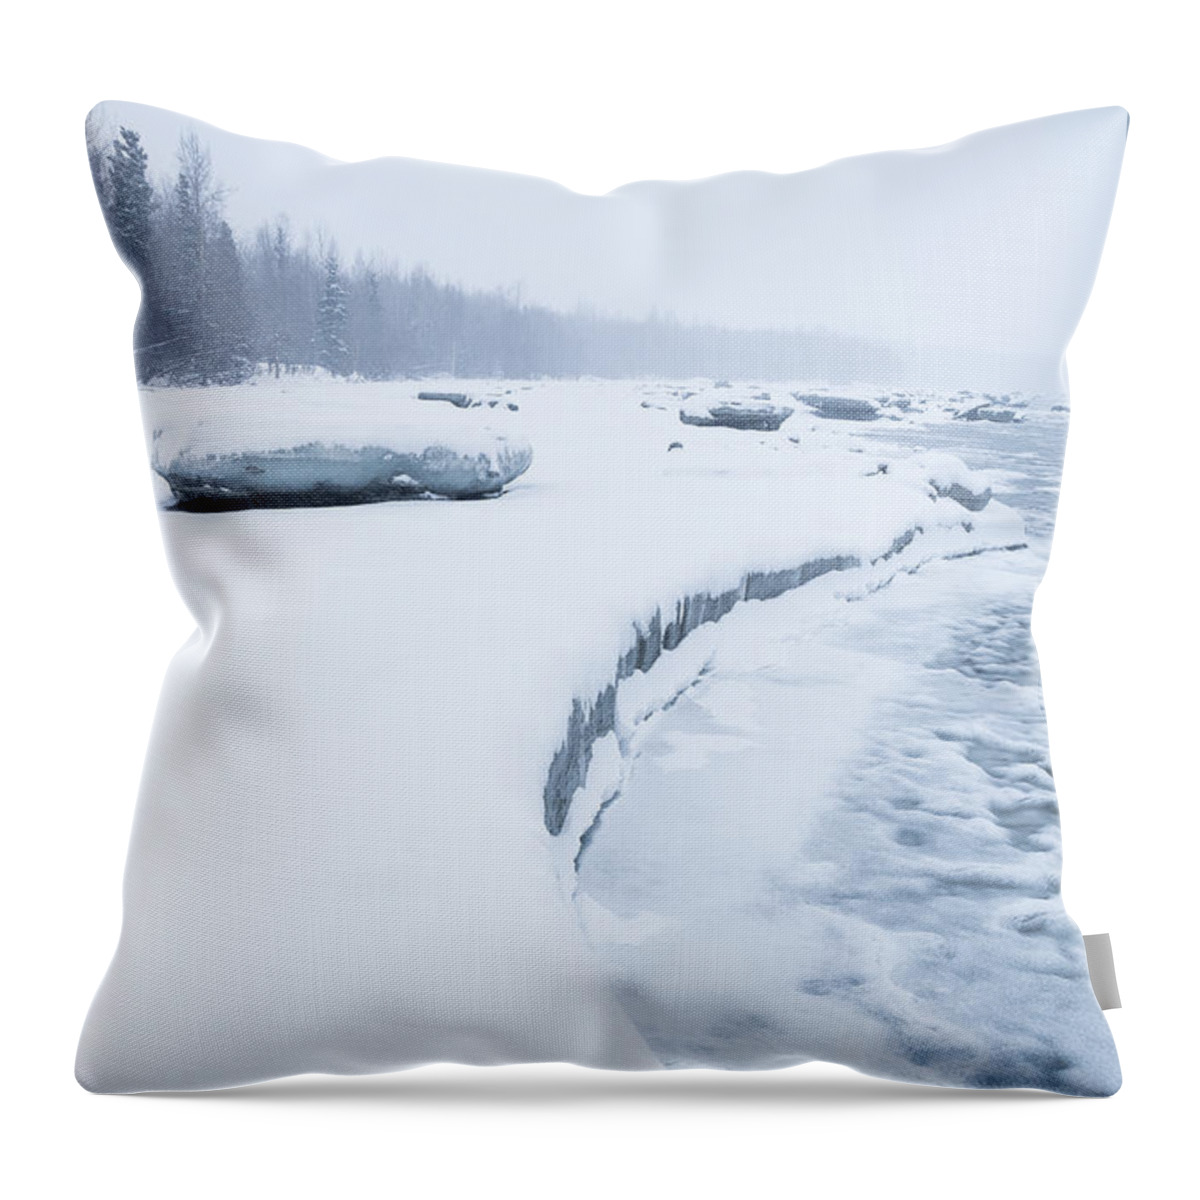 Alaska Throw Pillow featuring the photograph Cold Coast by Tim Newton